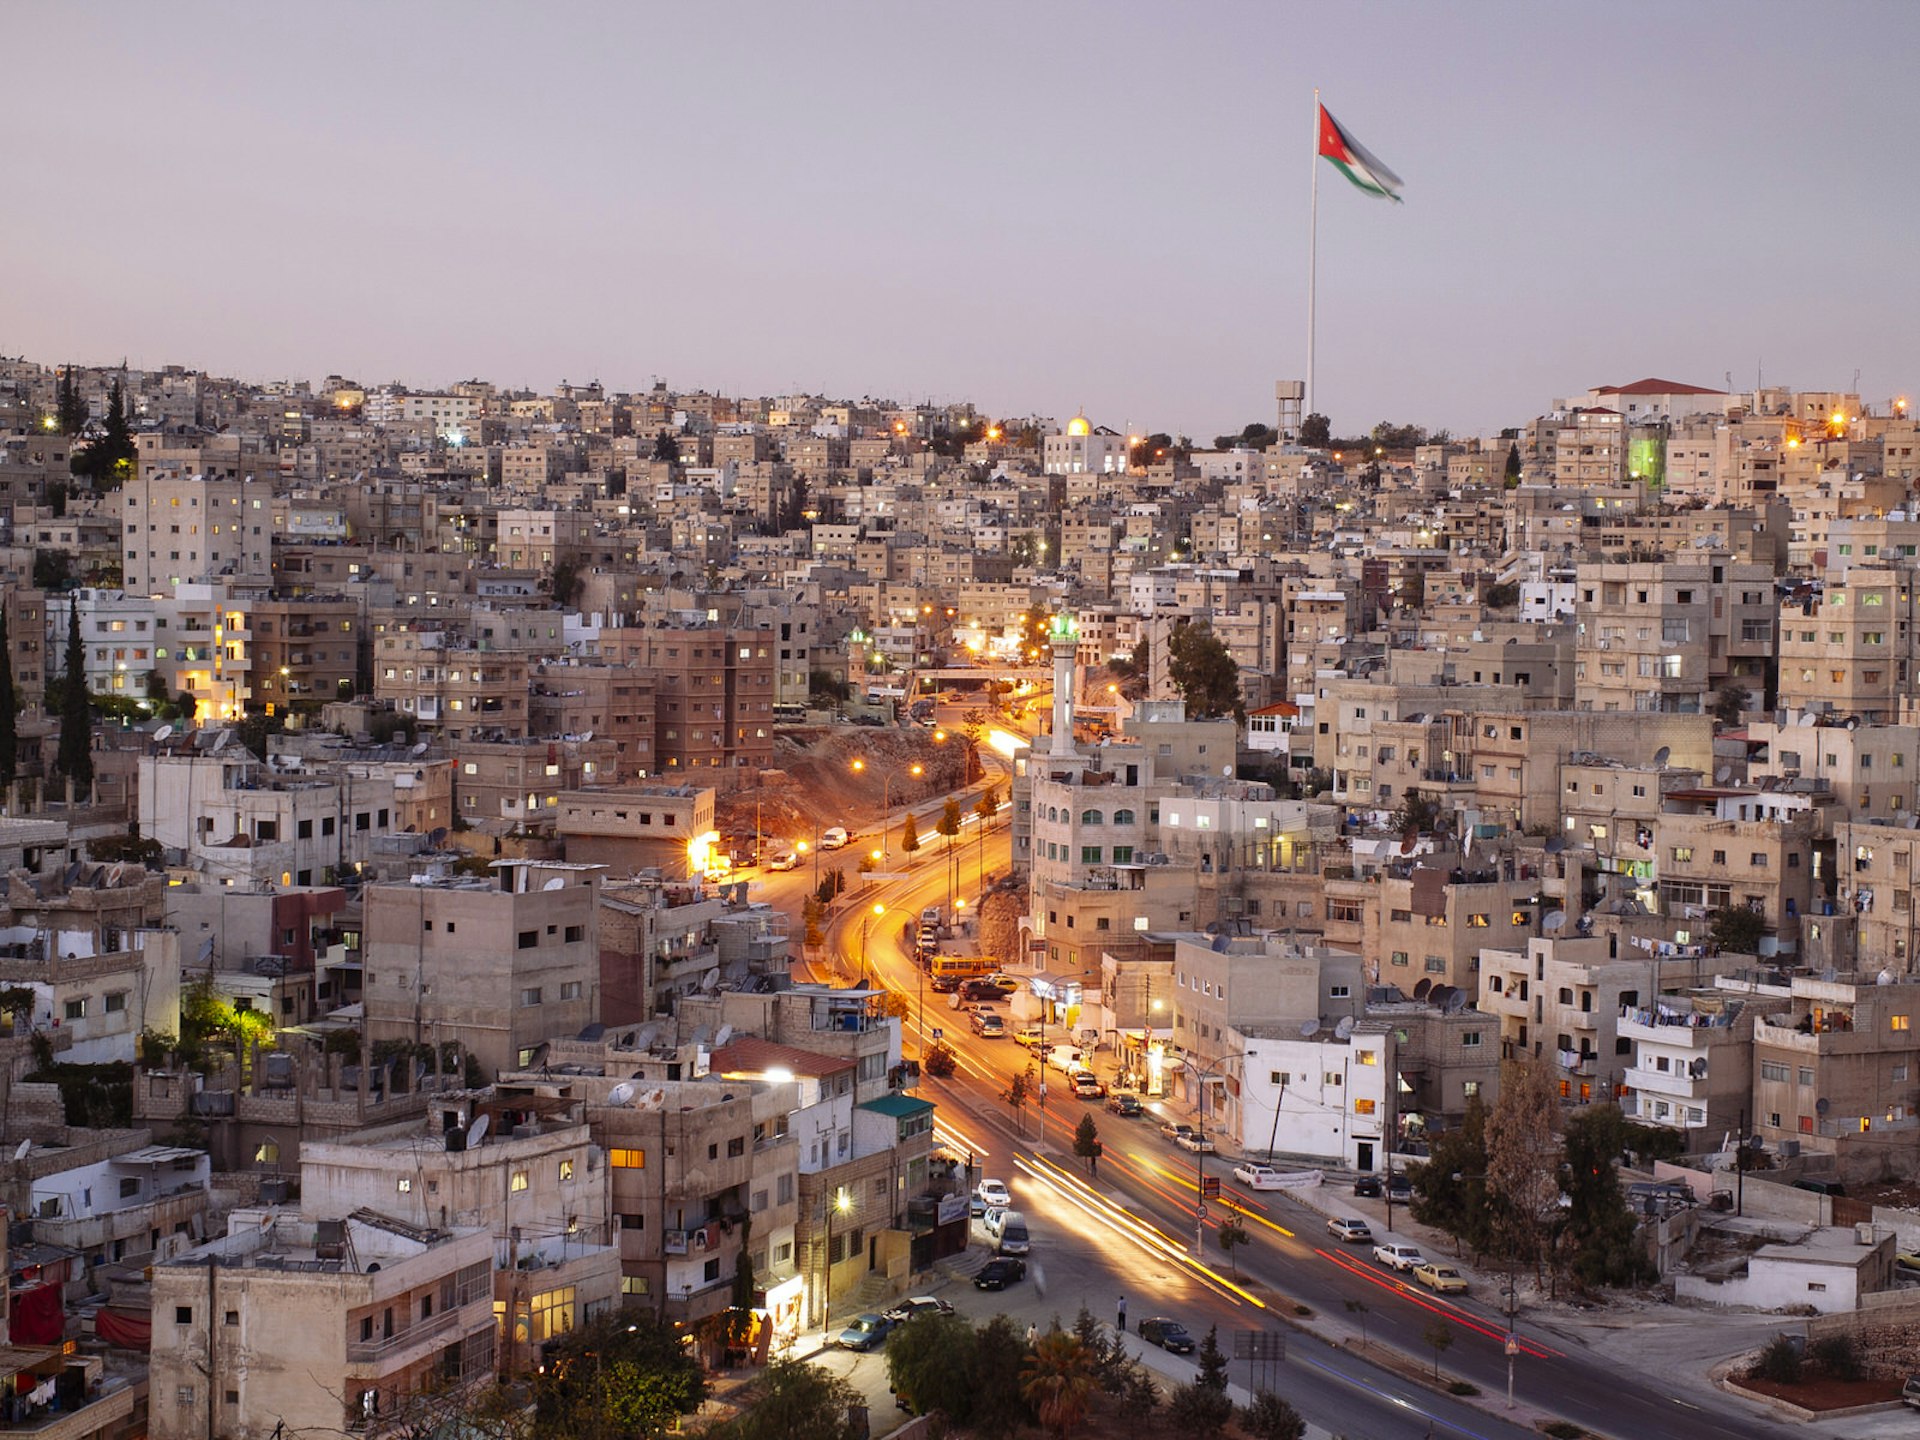 Street in Amman, Jordan, with giant flagpole